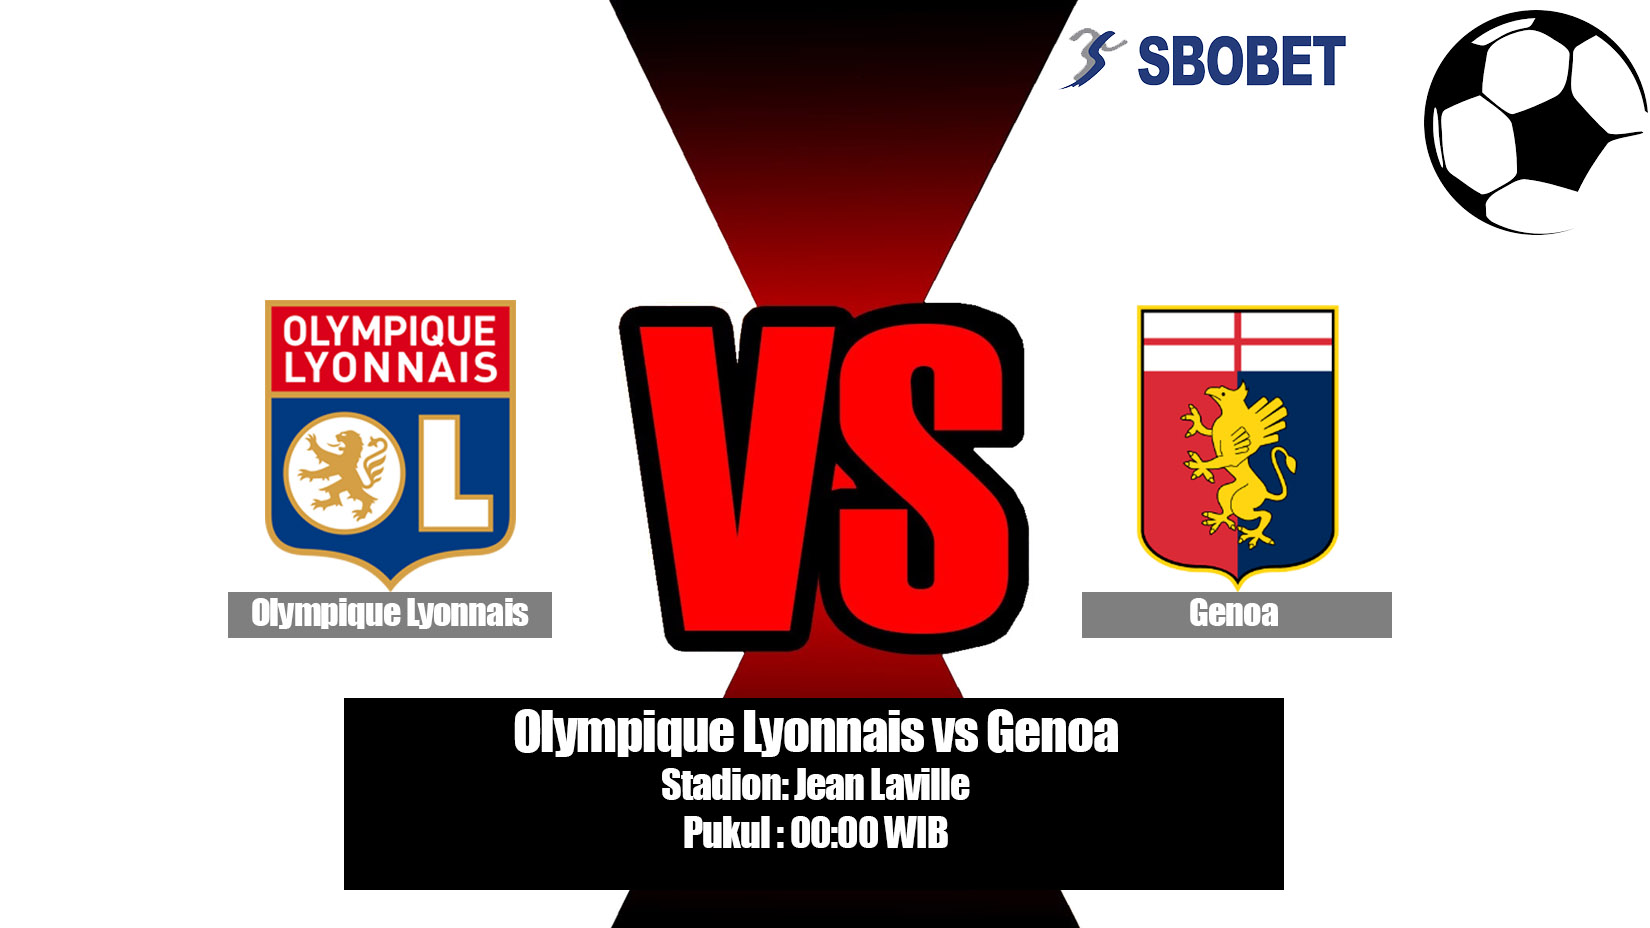 Prediksi Bola Olympique Lyonnais vs Genoa 21 Juli 2019